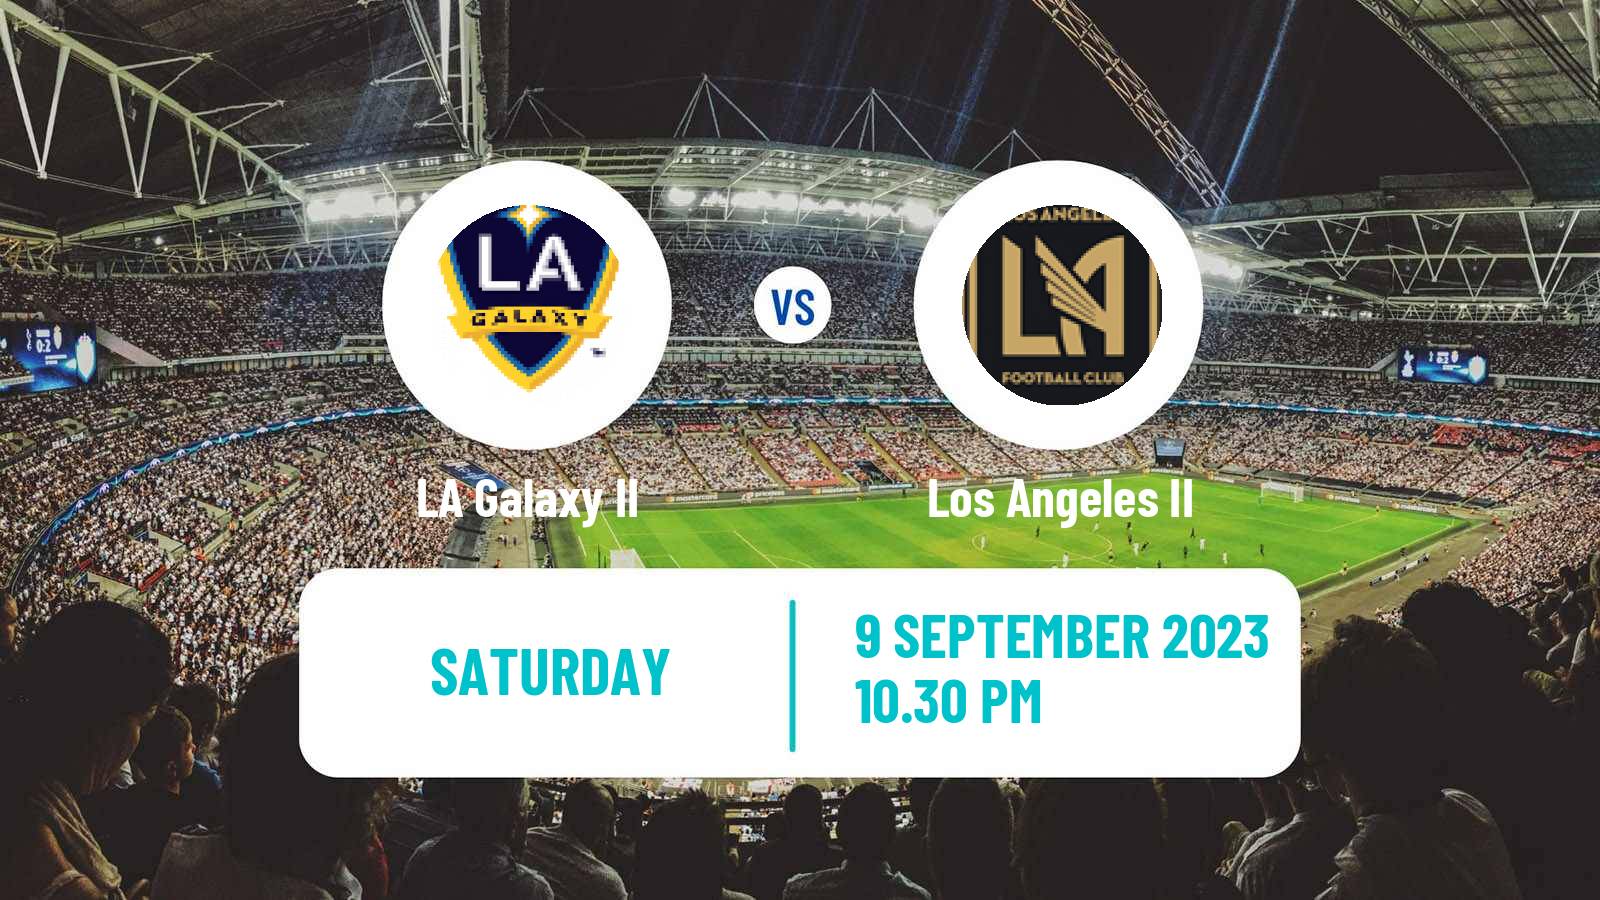 Soccer MLS Next Pro LA Galaxy II - Los Angeles II